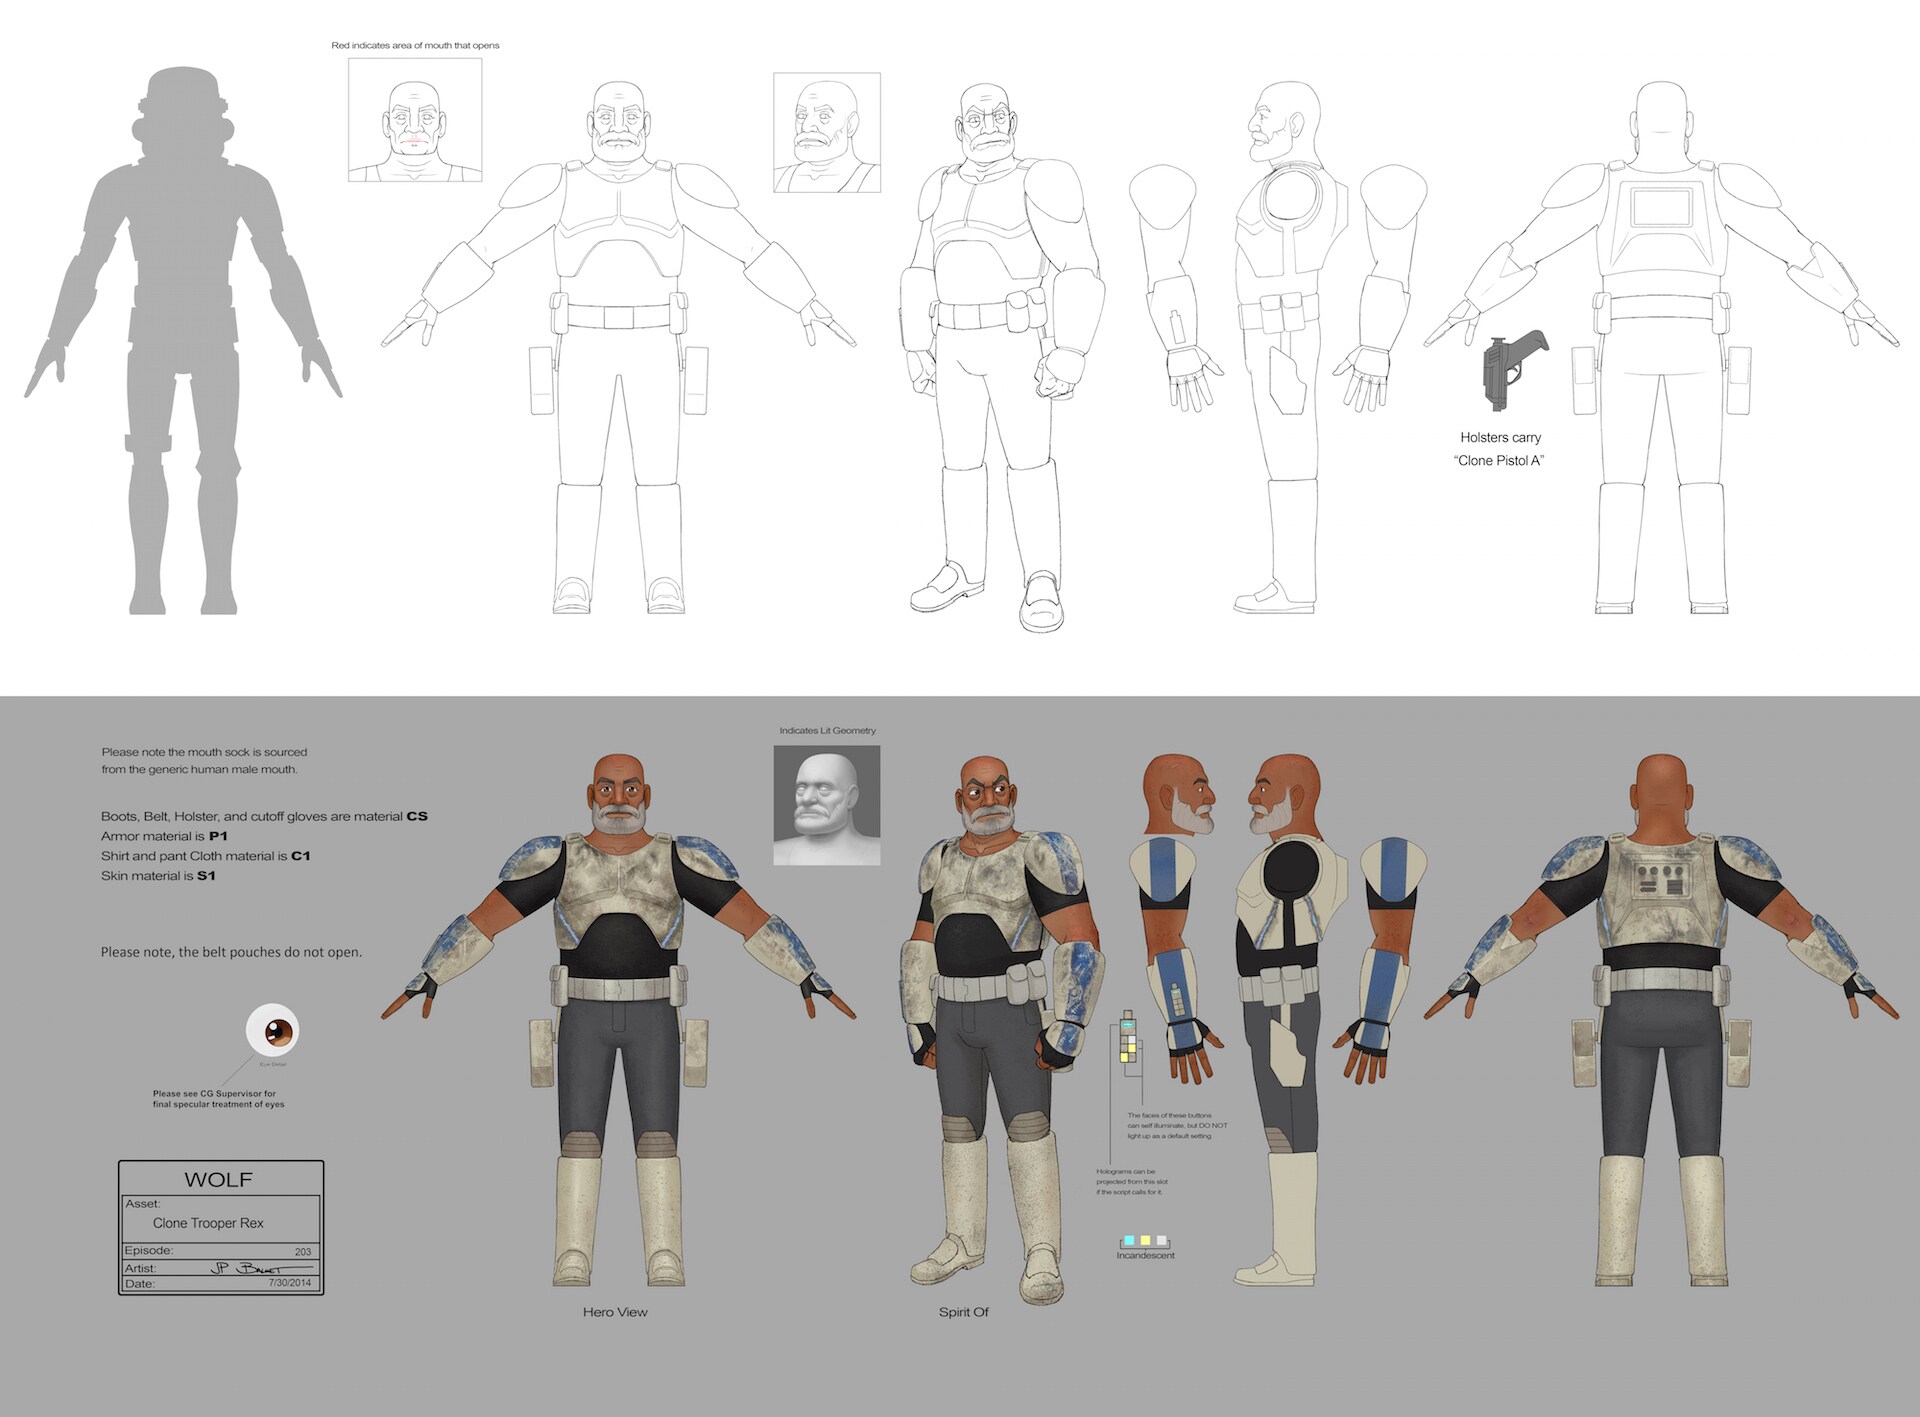 Clone Trooper Rex full character illustration by JP Balmet. 